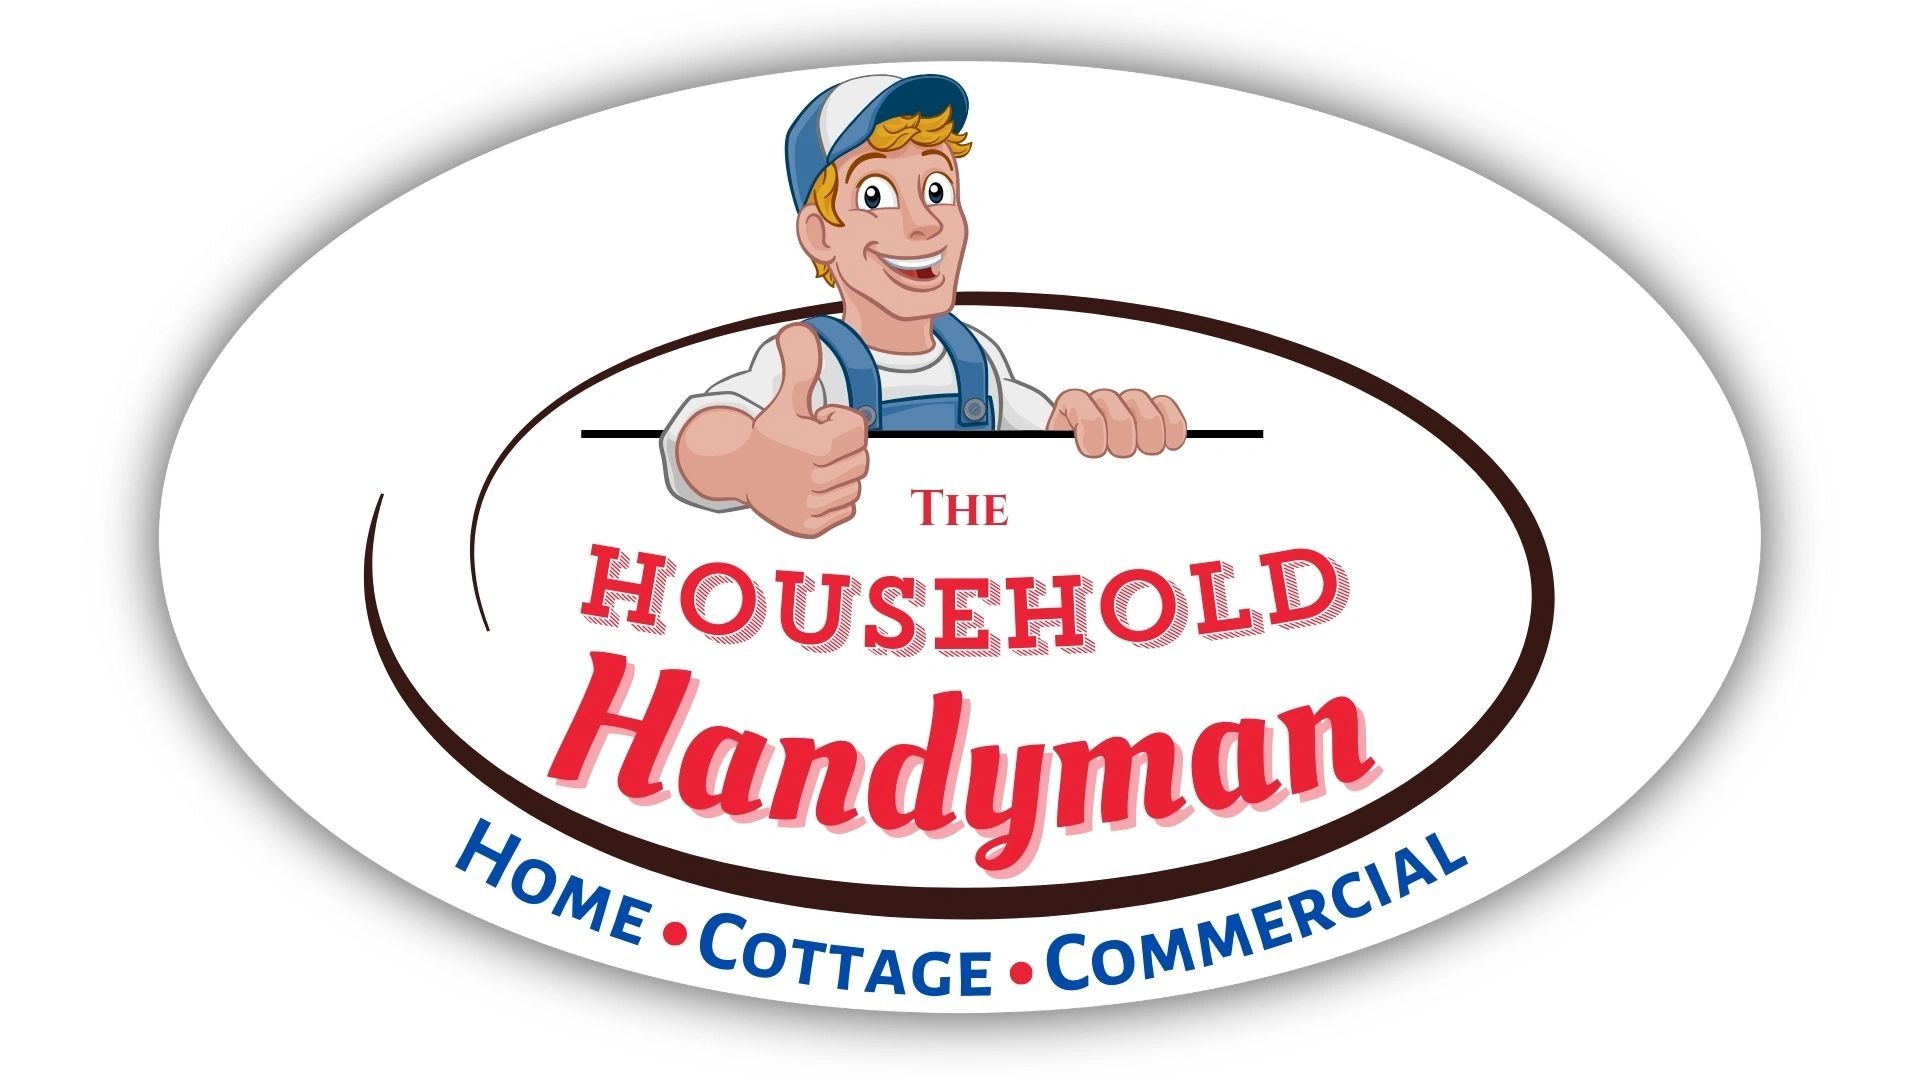 Home Repair Handyman logo • Macarons and Mimosas